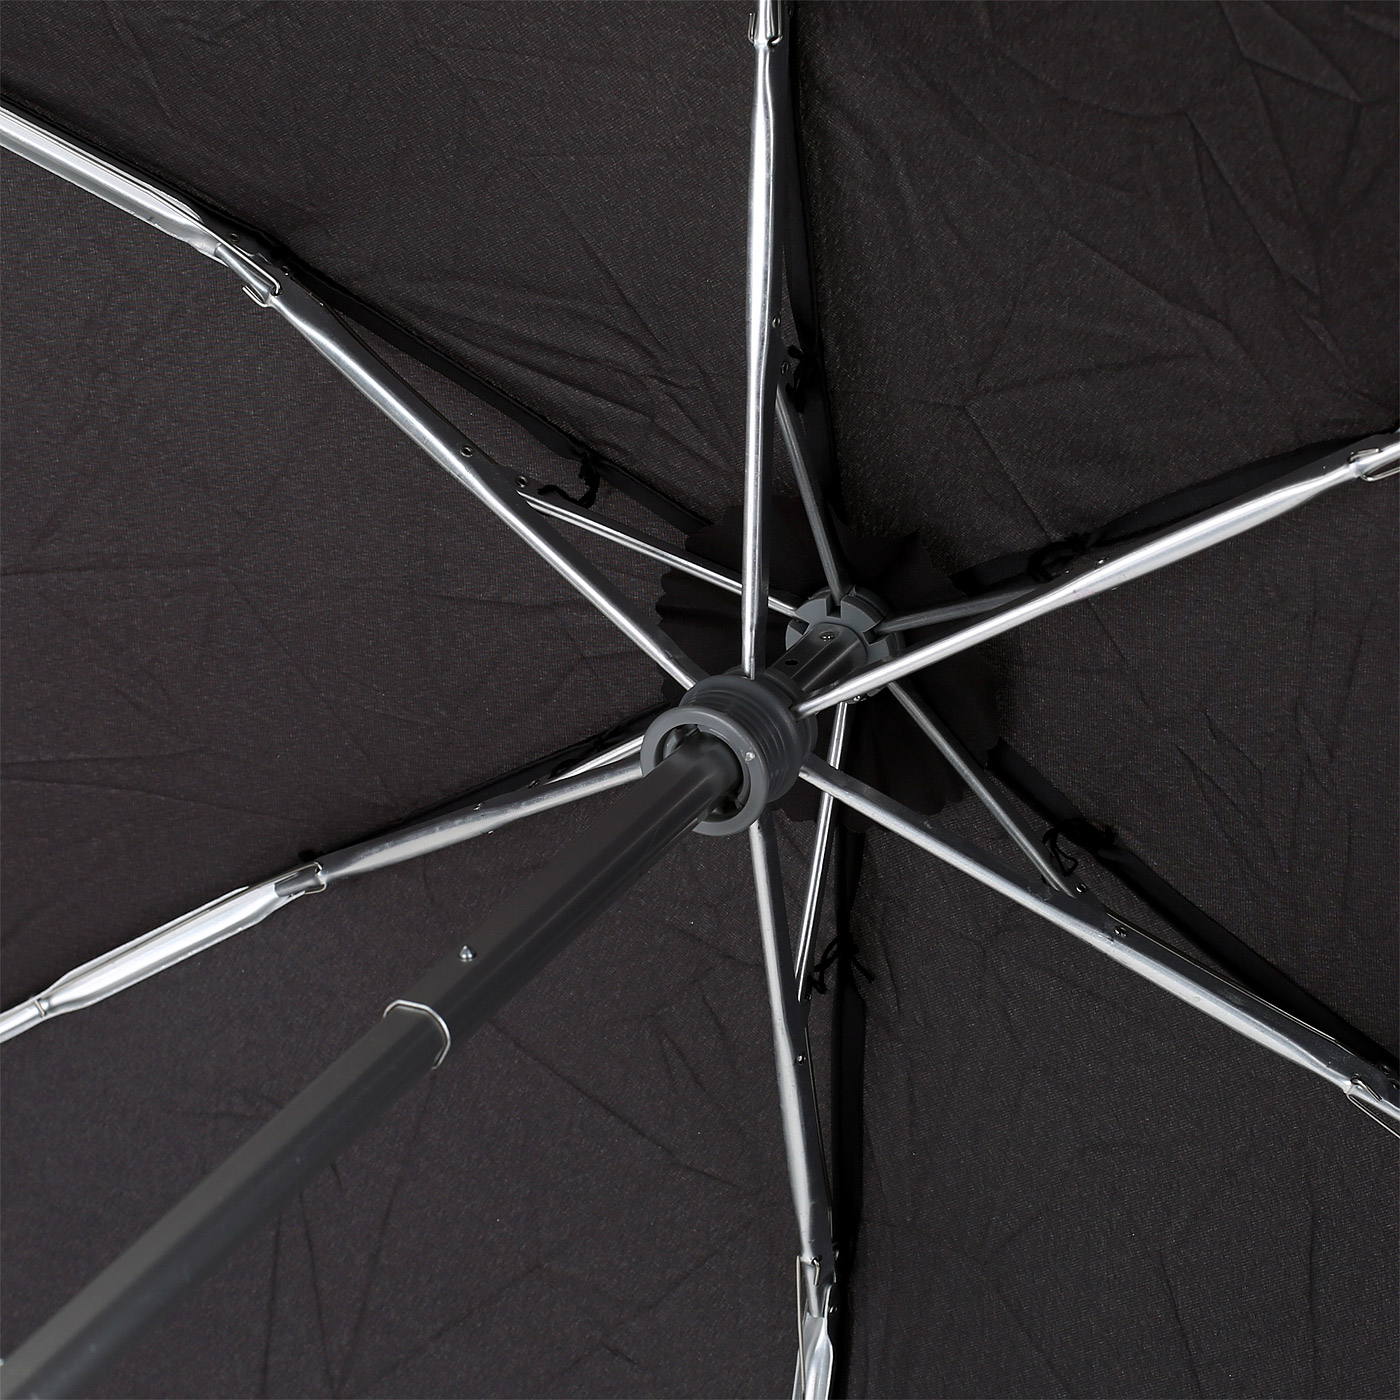 Складной зонт с чехлом Samsonite Minipli colori